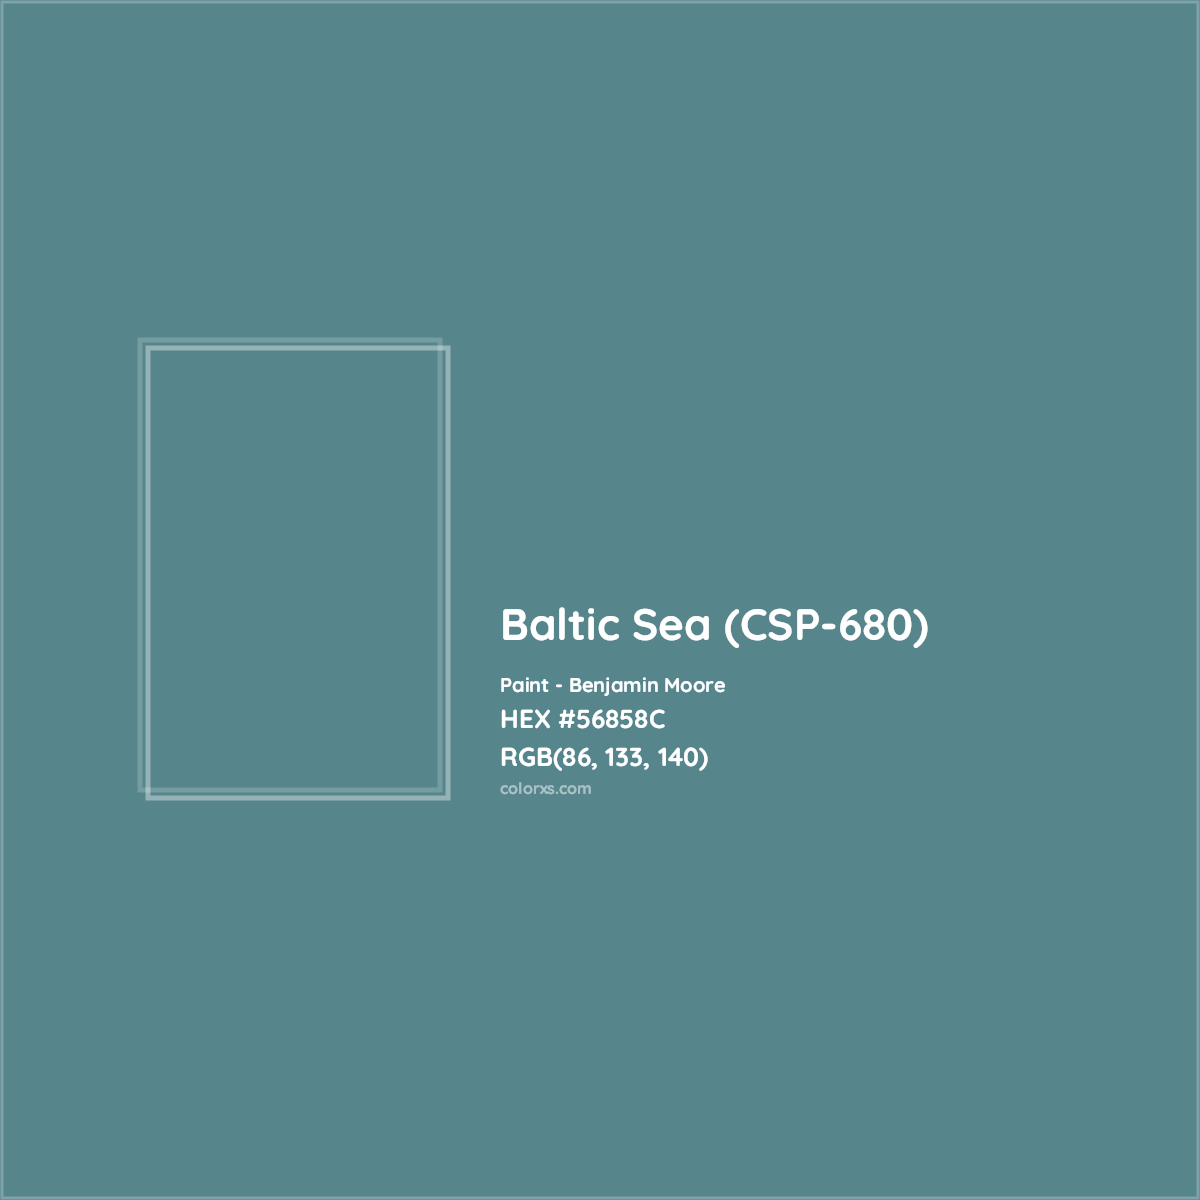 HEX #56858C Baltic Sea (CSP-680) Paint Benjamin Moore - Color Code